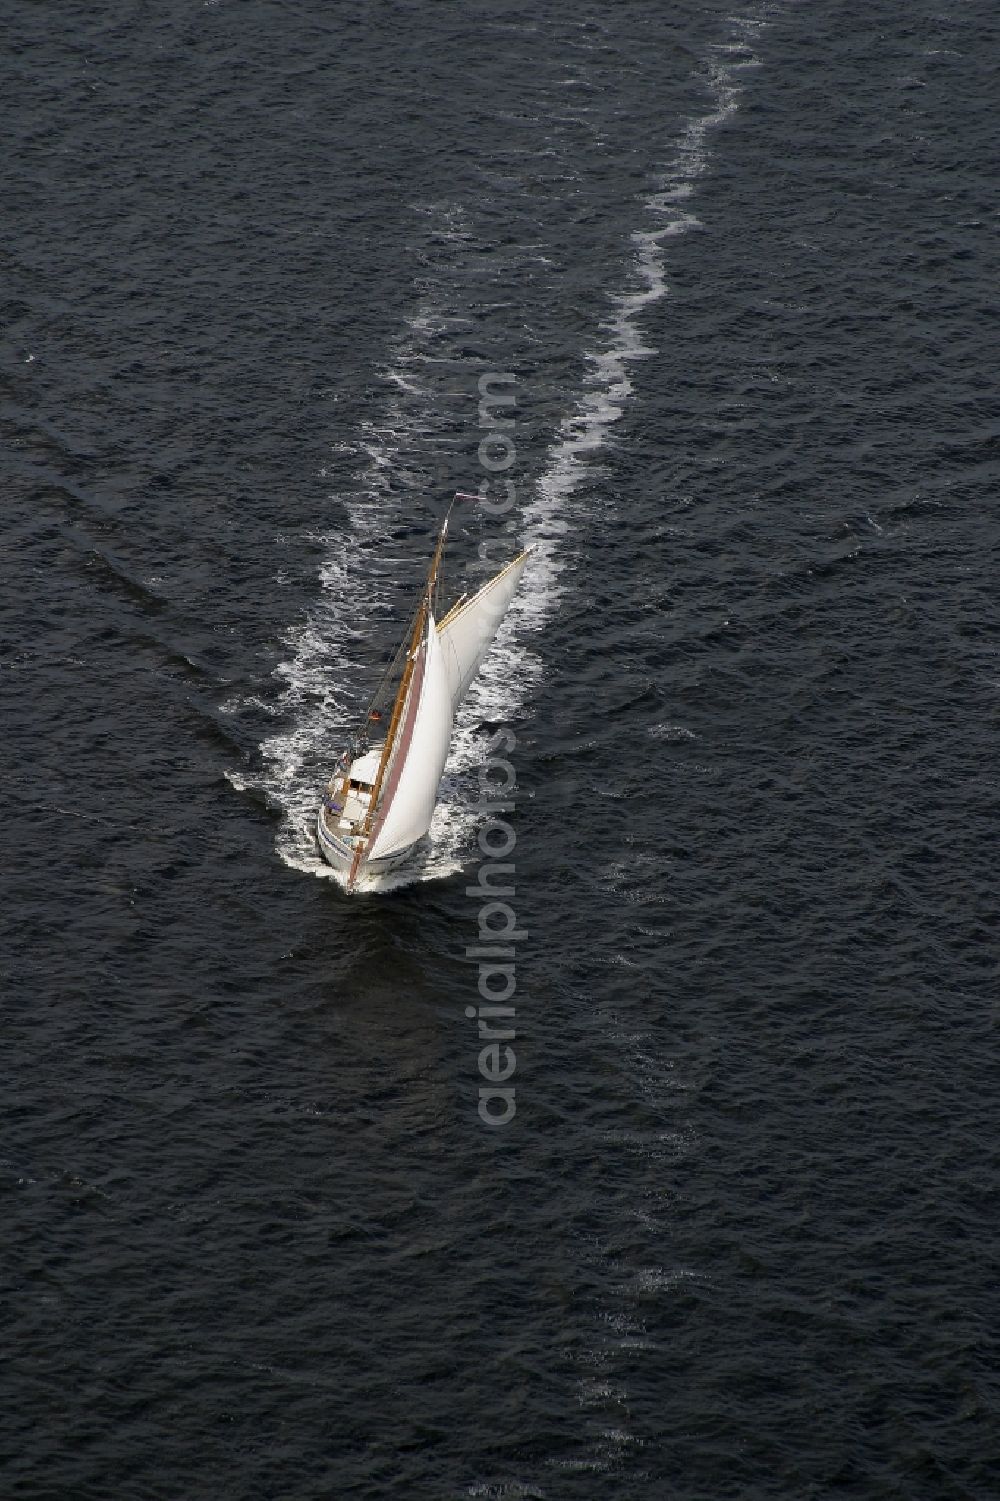 Aerial image Flensburger Förde - Sailboat under way in Flensburg Fjord in Schleswig-Holstein